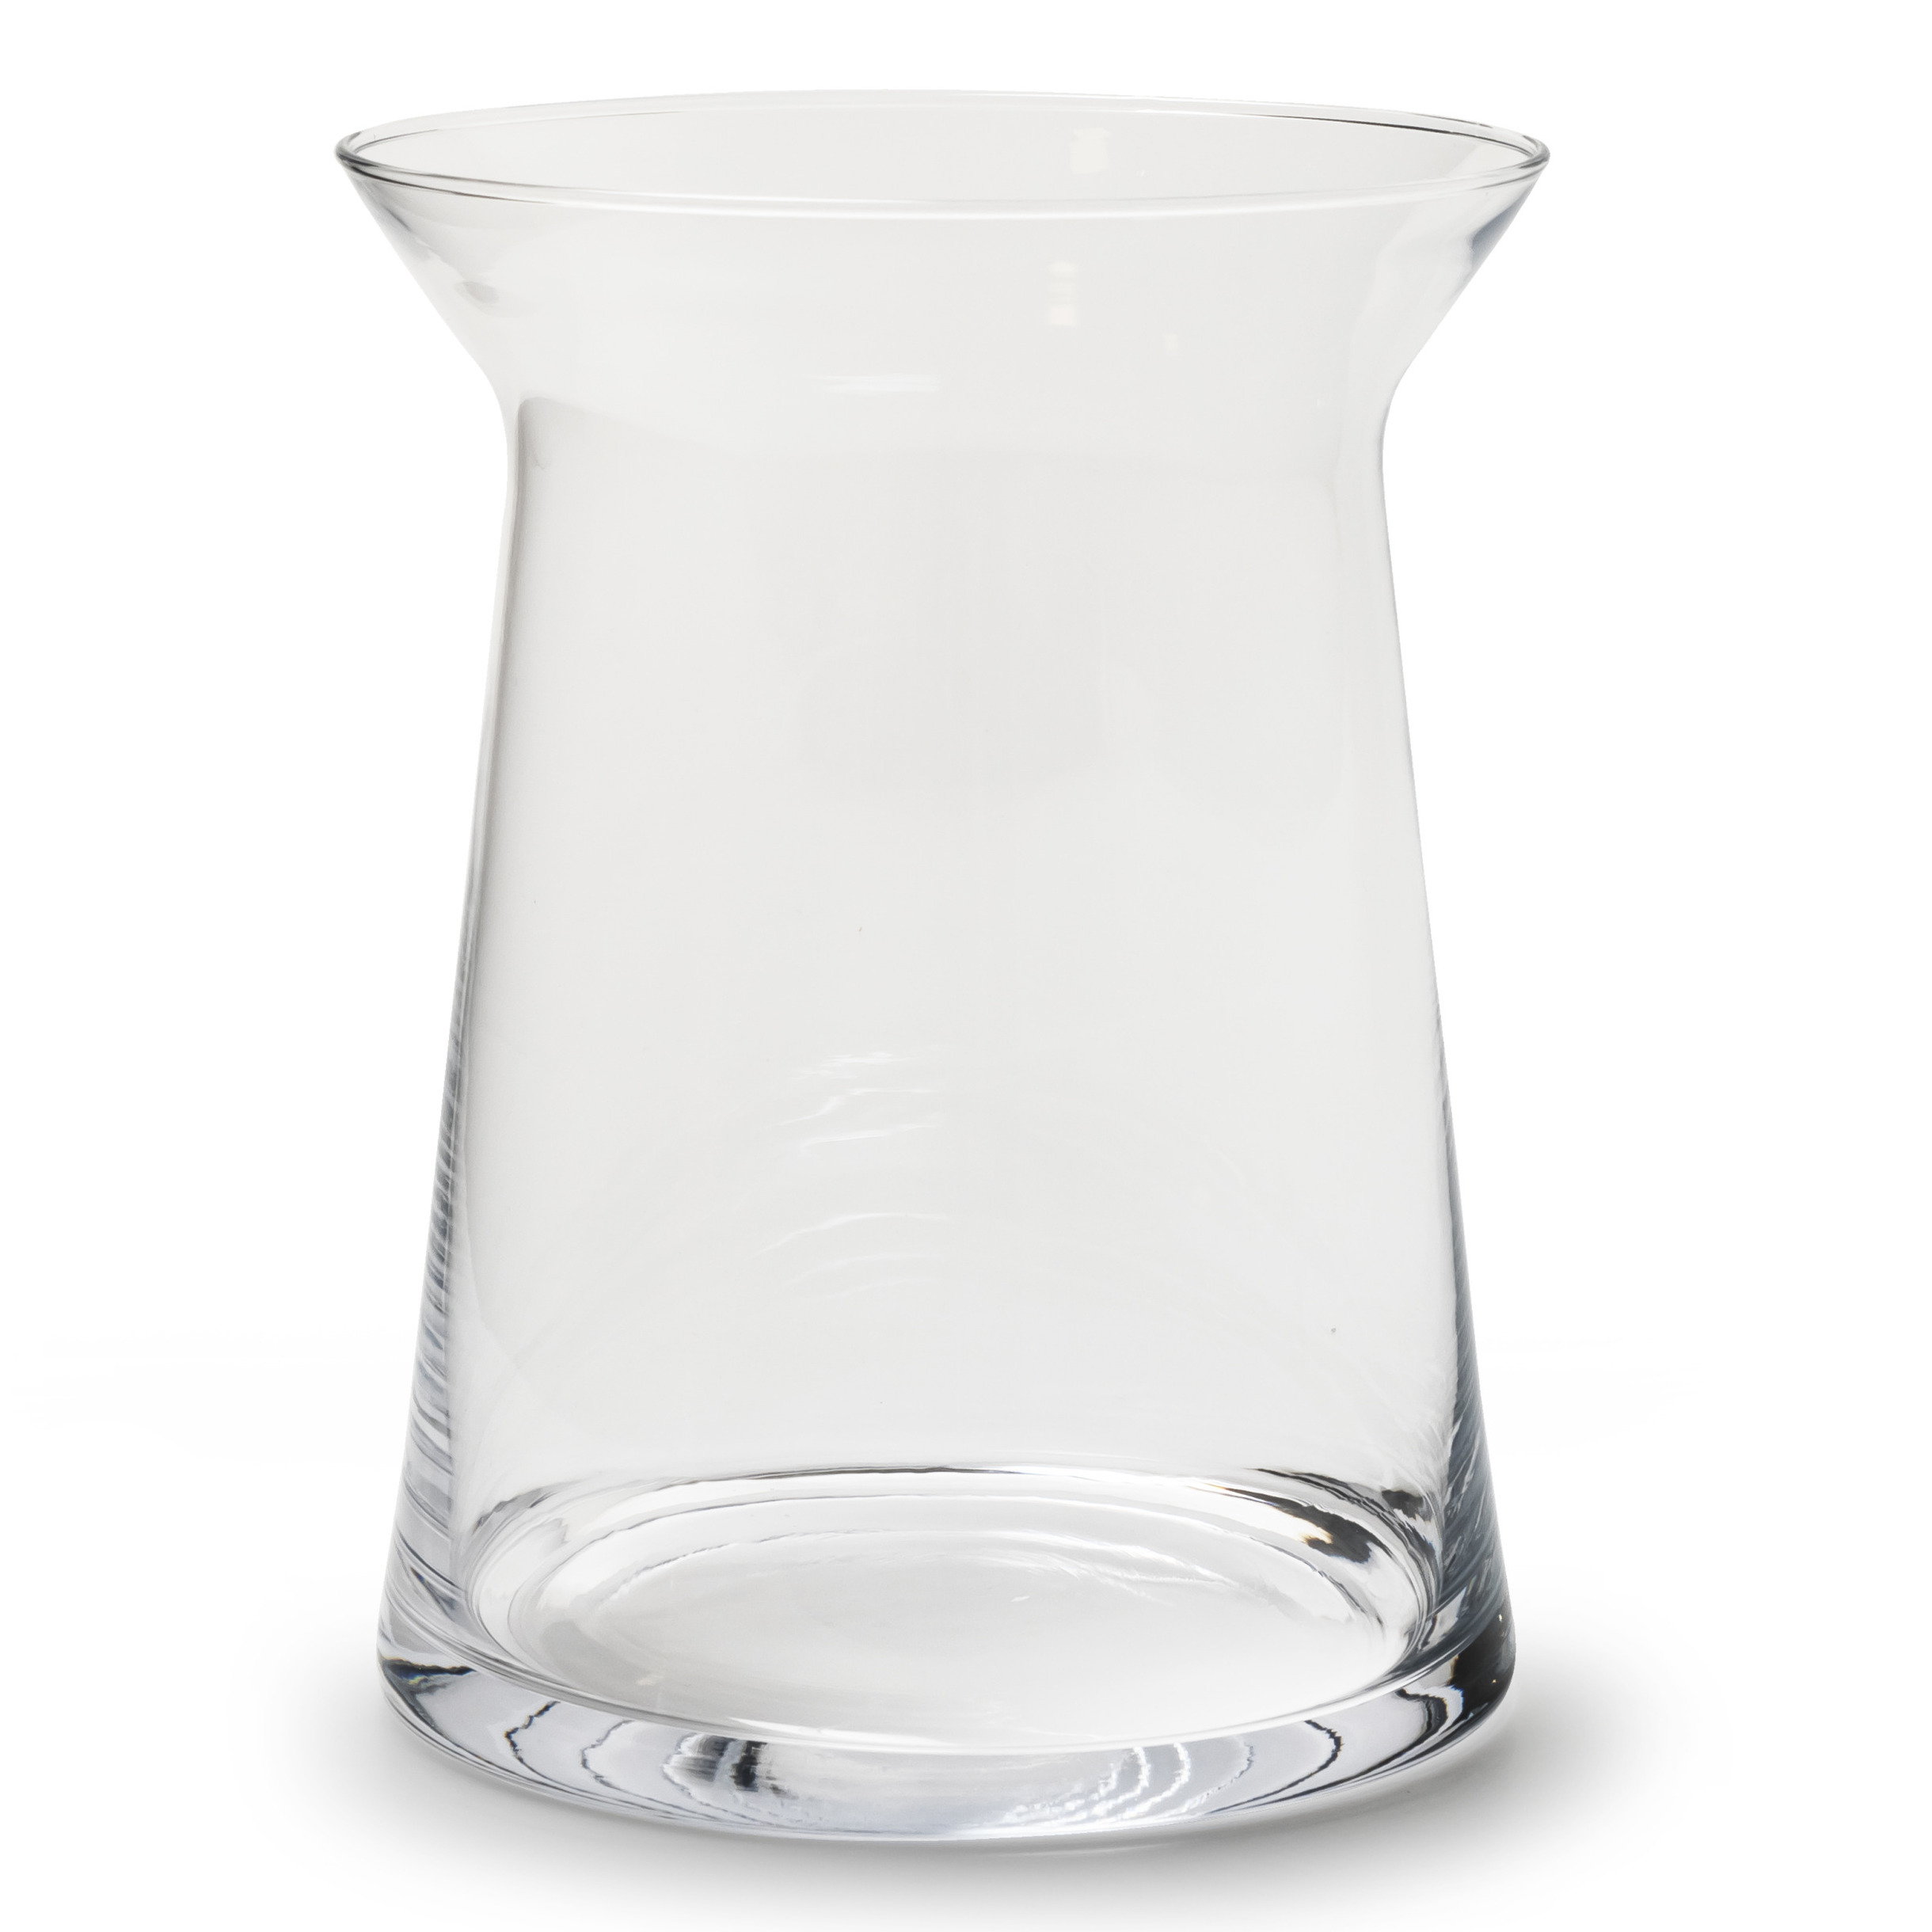 Merkloos Transparante trechter vaas/vazen van glas 19 x 25 cm -